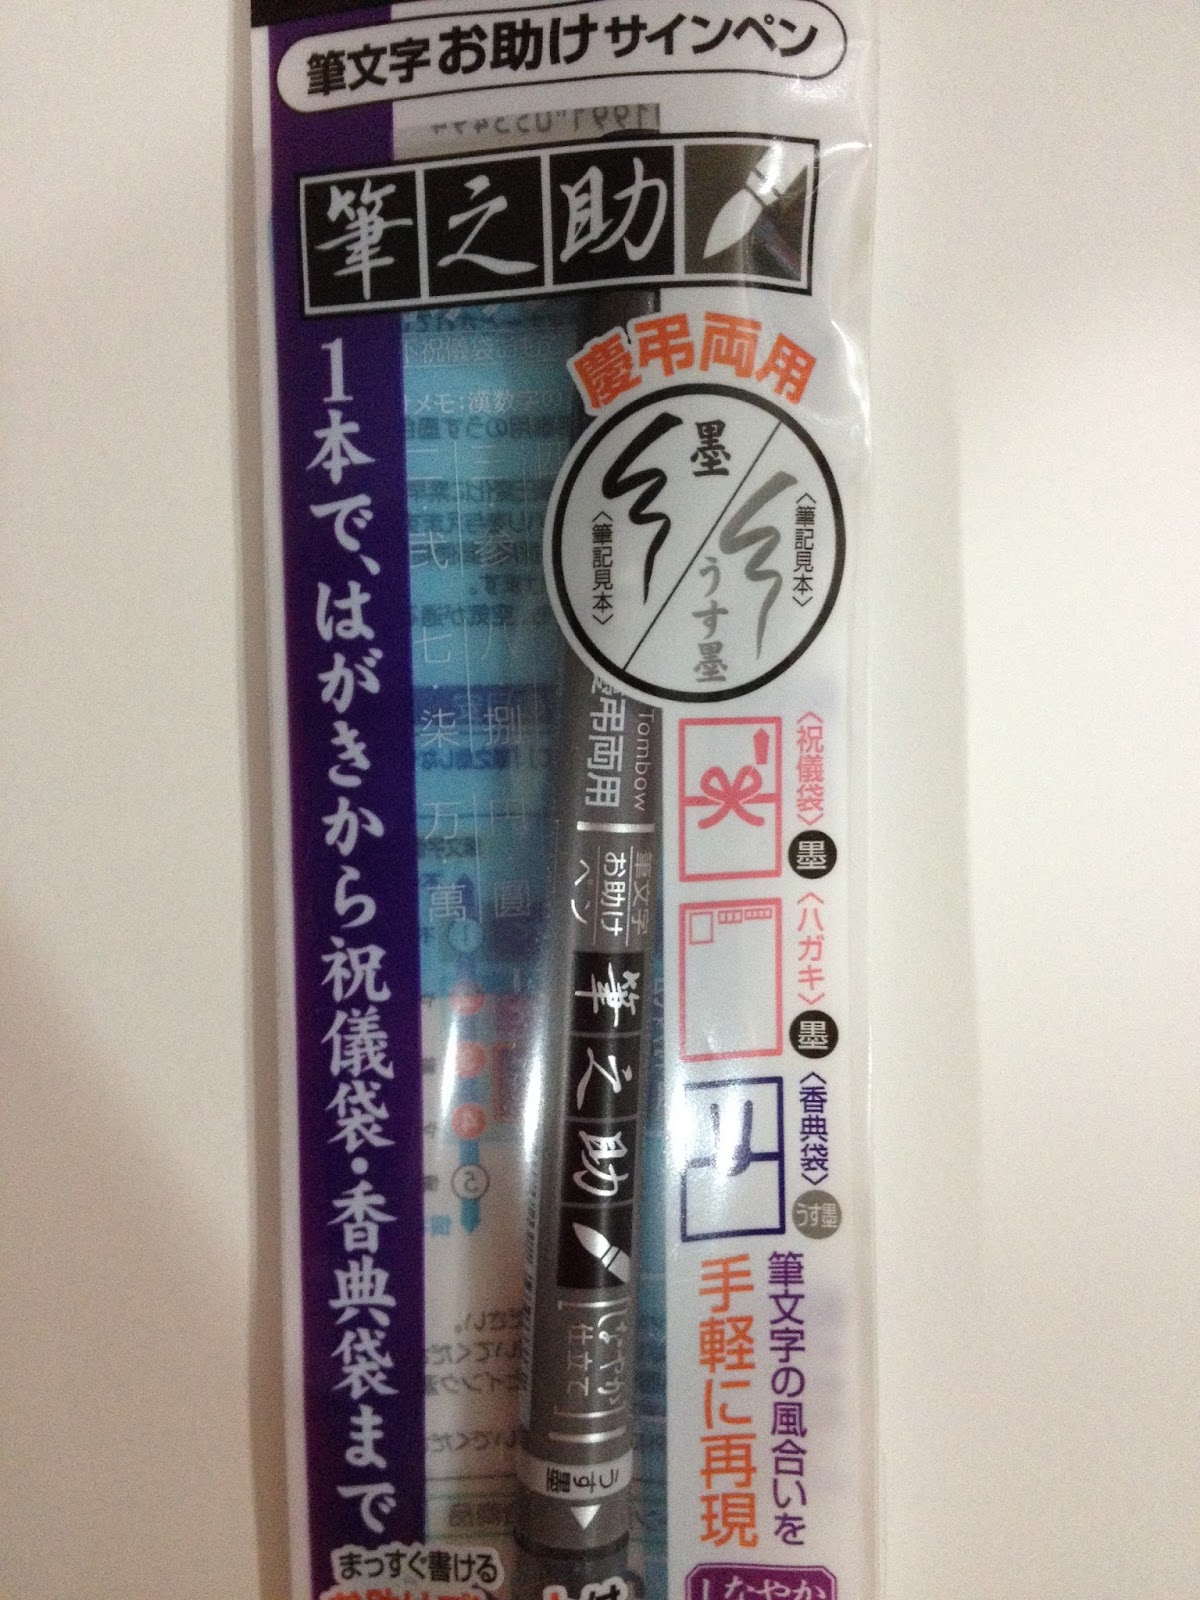 Tombow Fudenosuke Dual Tip Brush Pen - Tokyo Pen Shop